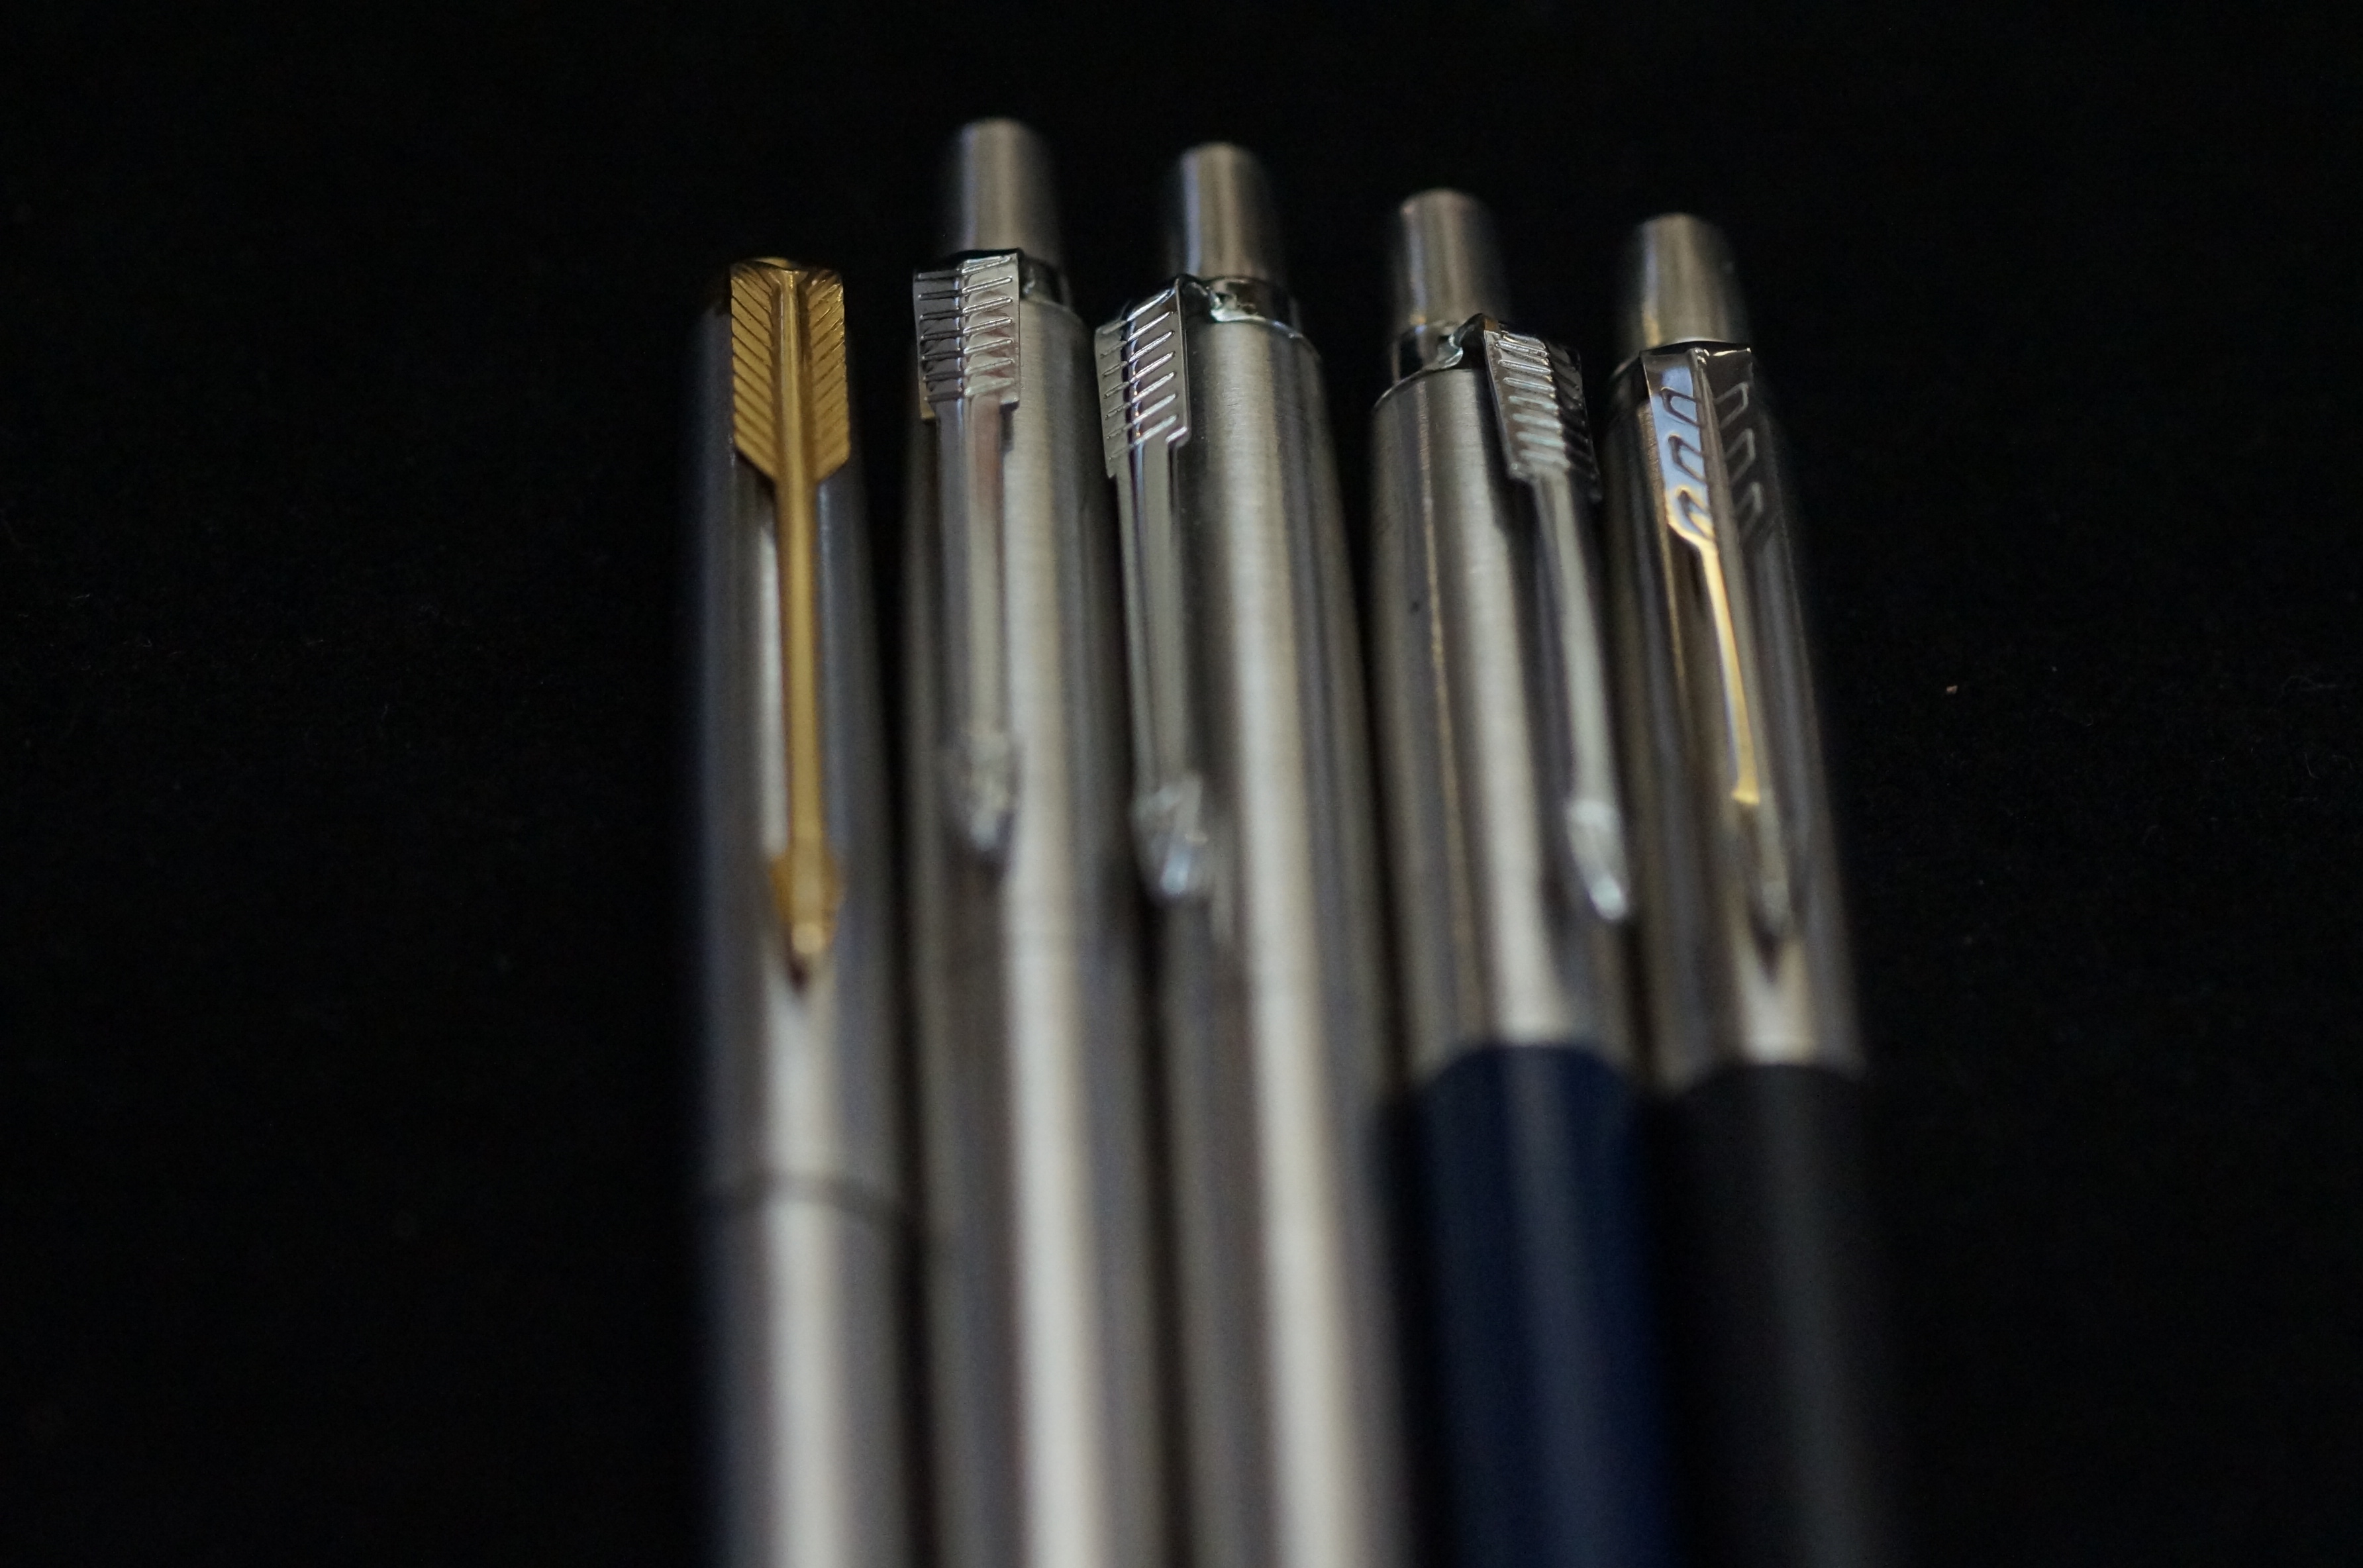 5 ballpoint Parker pens